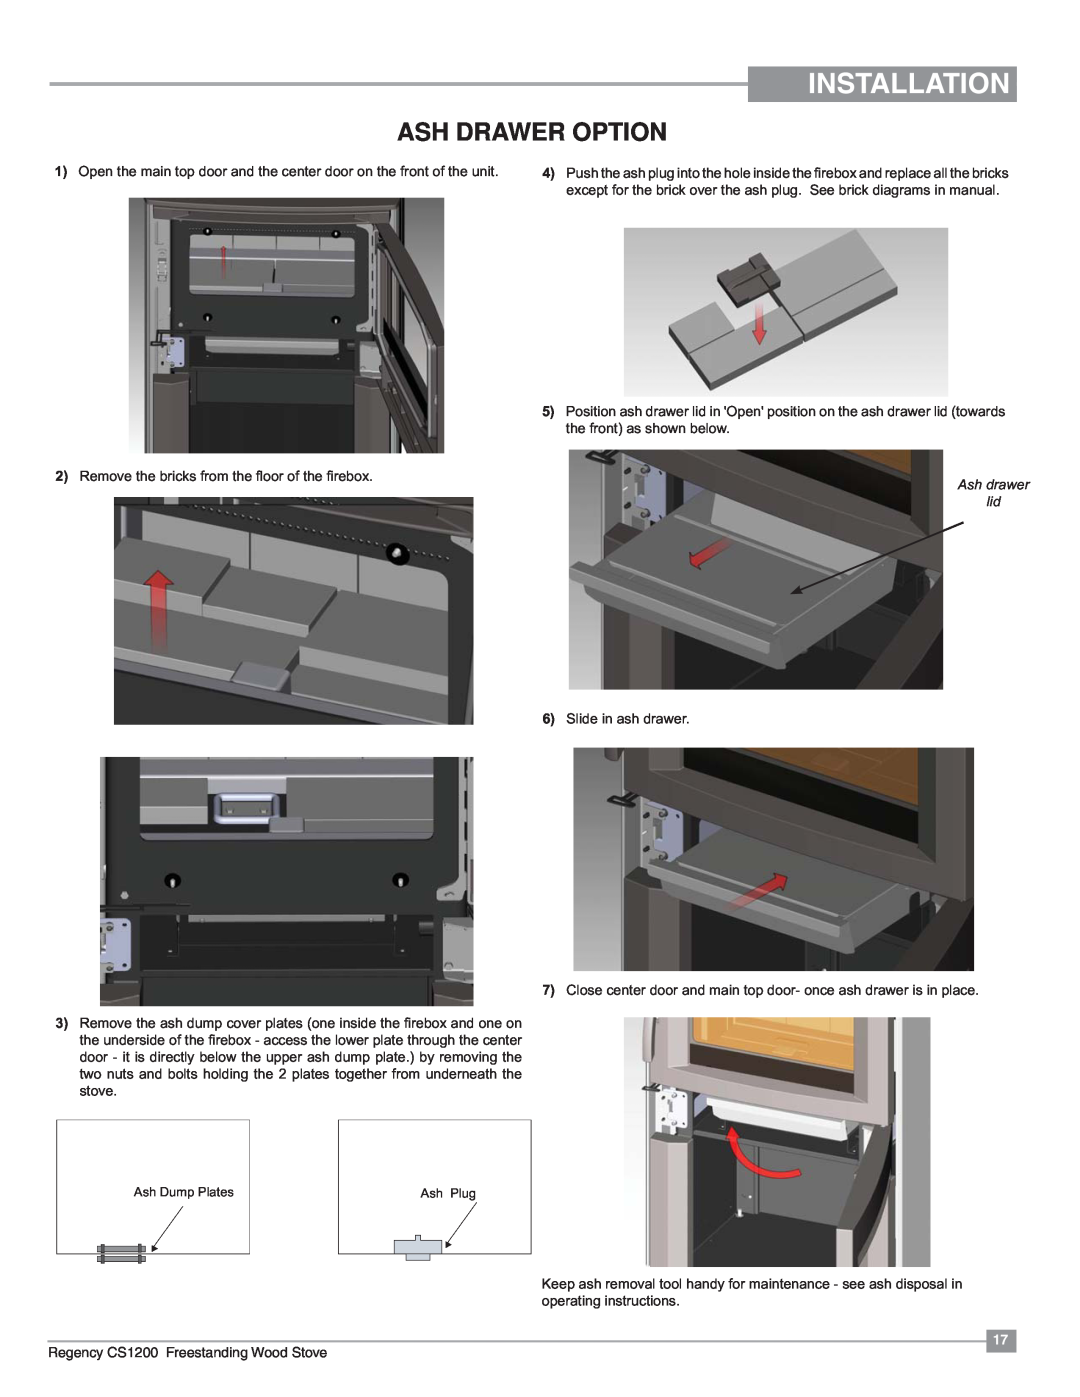 Regency CS1200 installation manual Installation, Ash Drawer Option, Ash drawer lid 